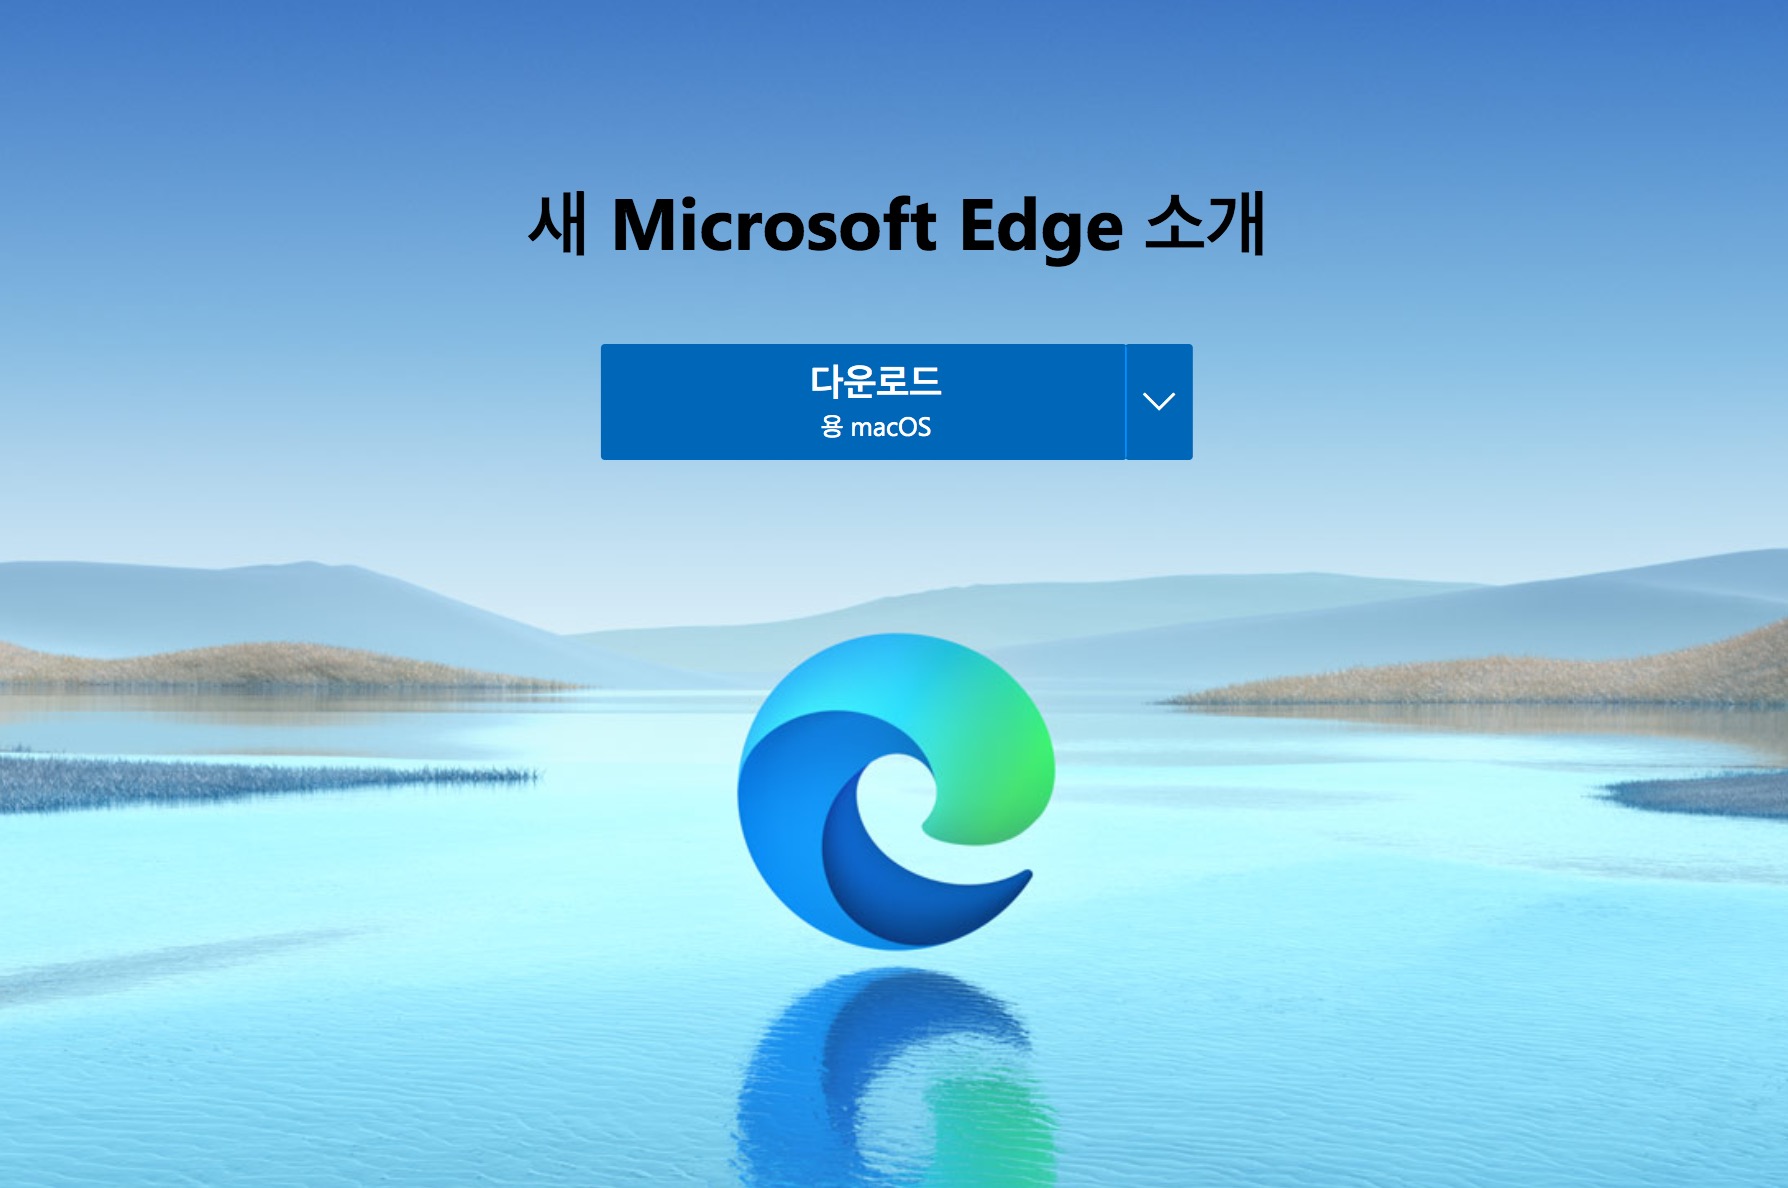 microsoft edge latest version reviews